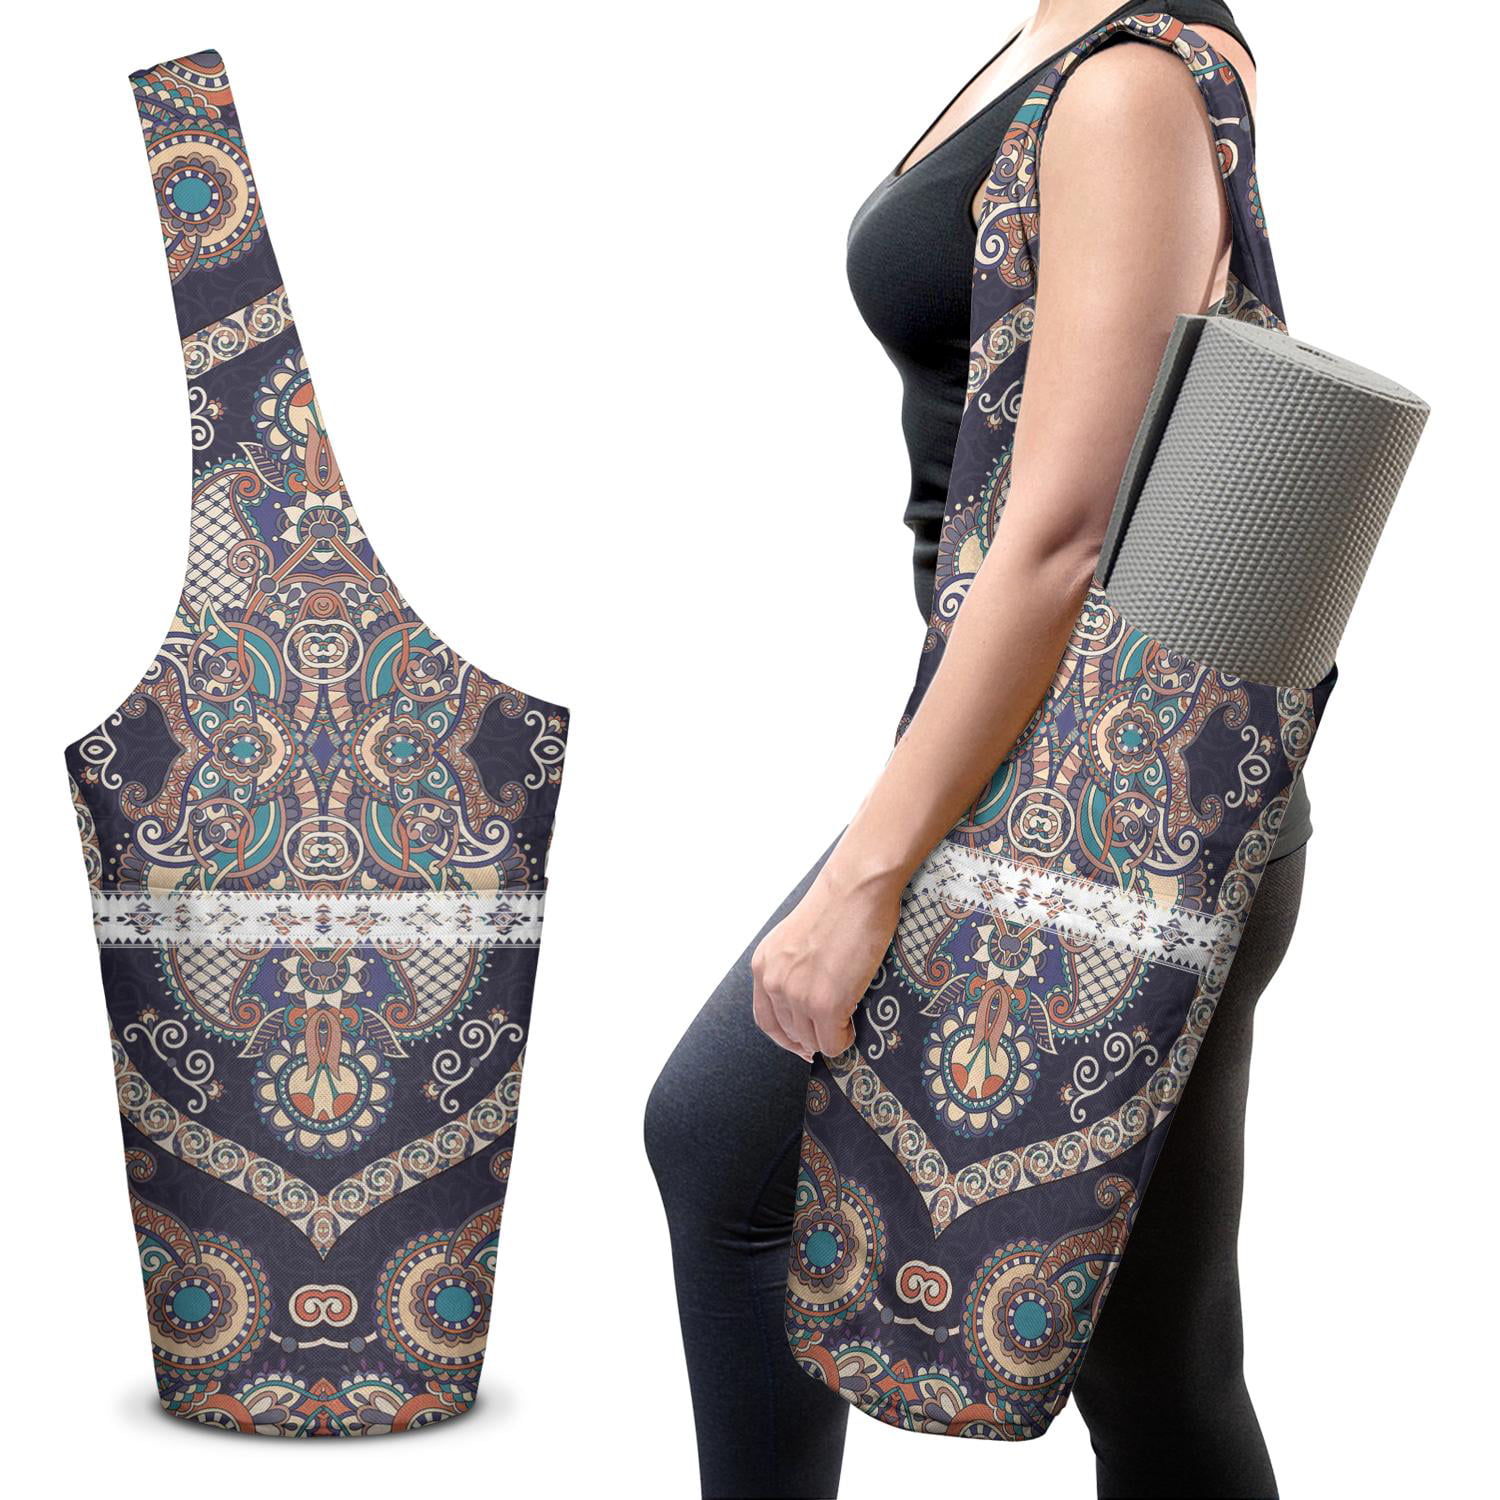 Fashion Printed Yoga Mat Bag with Large Side Pocket & Zipper Pocket Long Tote  Yoga Bag Fit Most Size Mats - Holds More Yoga Accessories Mandala Black  37x15.5